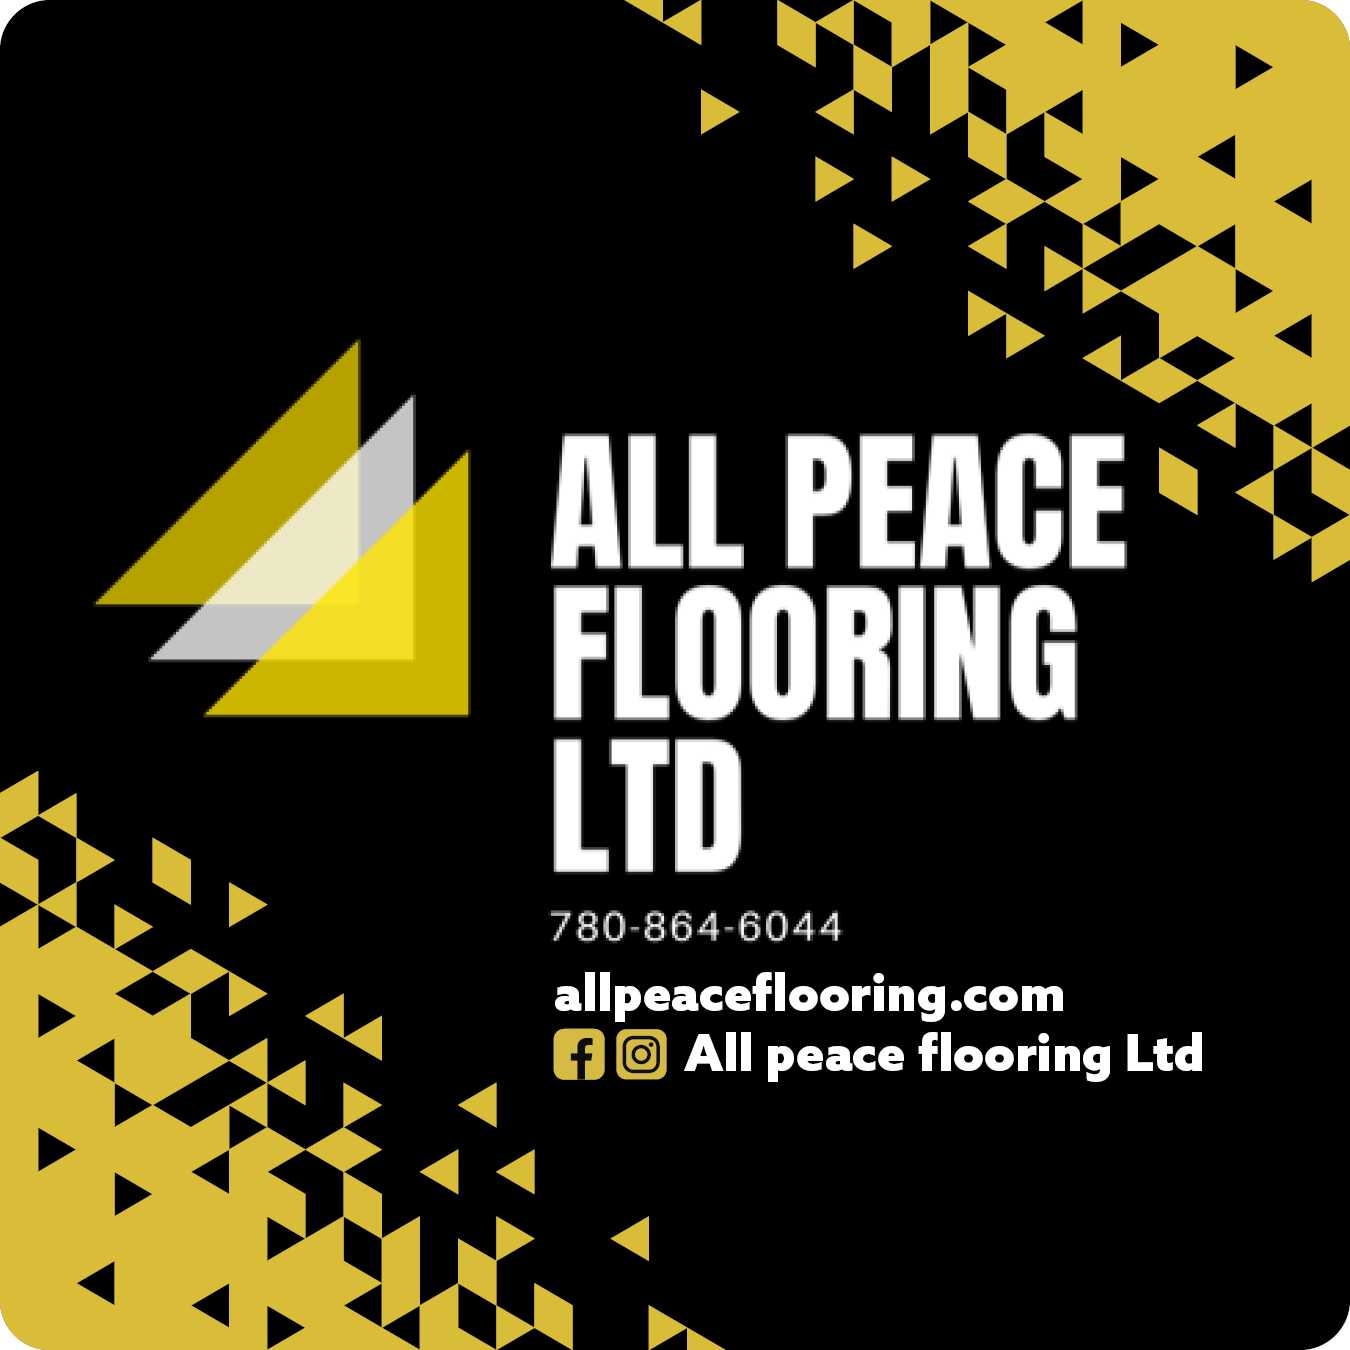 All Peace Flooring Ltd